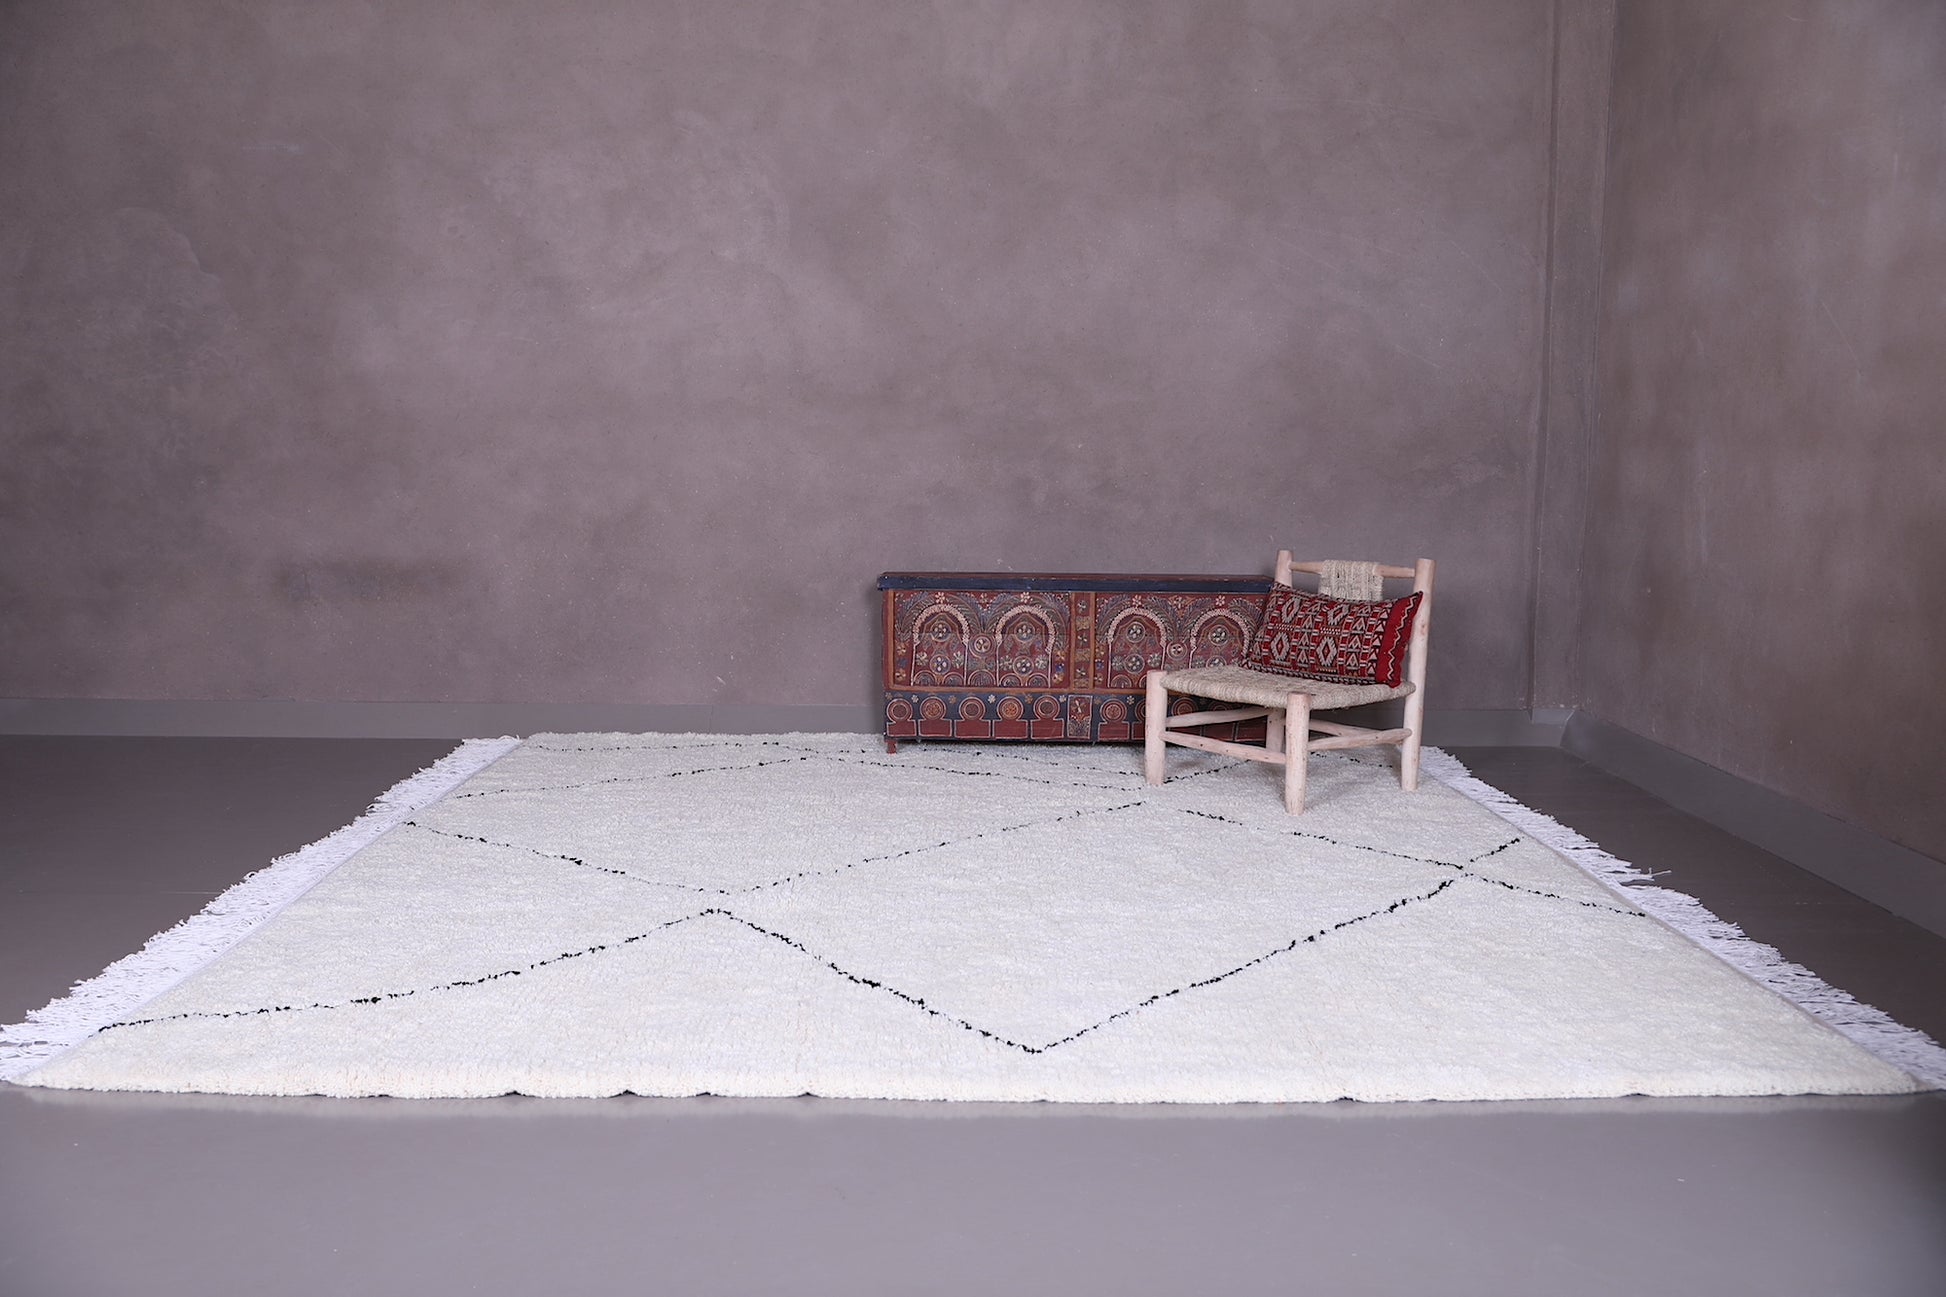 Beni ourain custom rug - All wool Moroccan Carpet